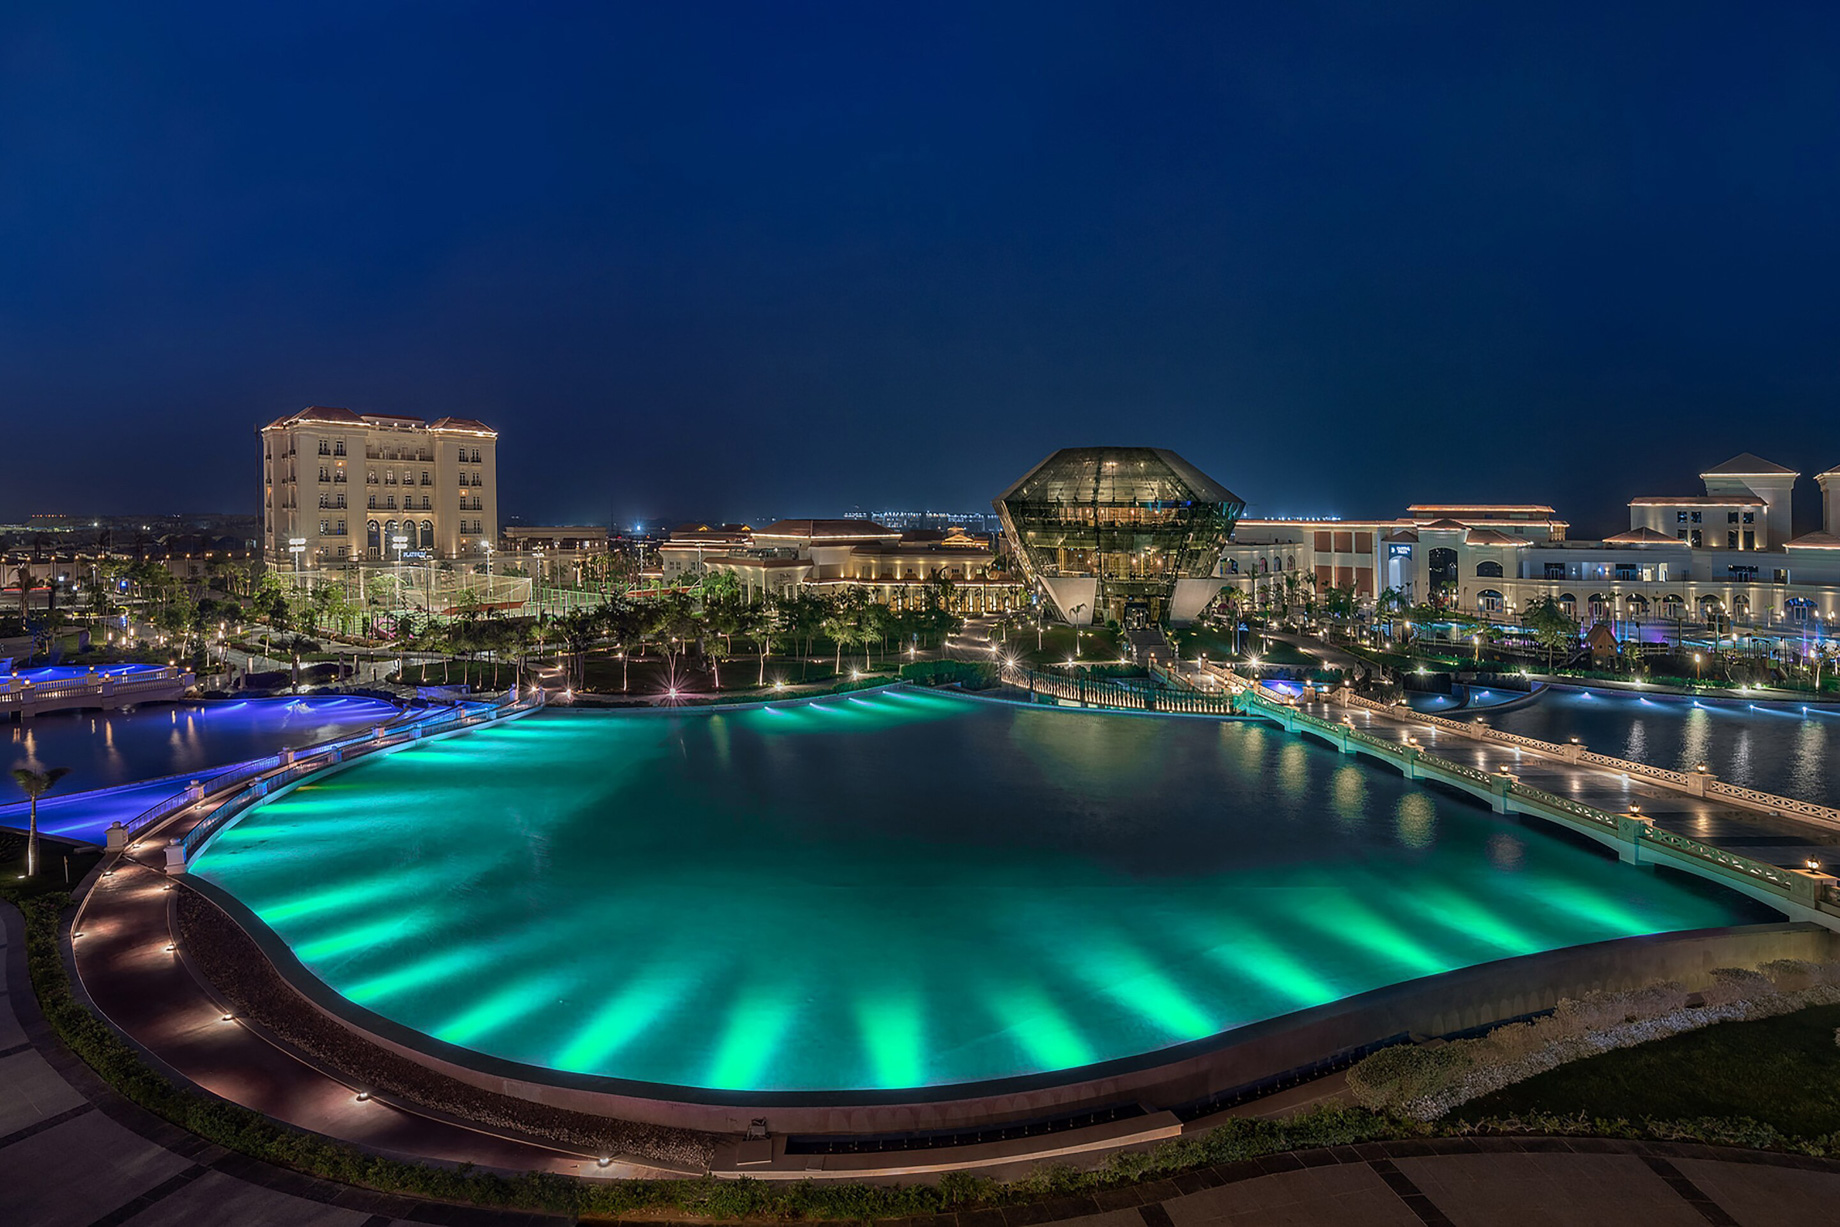 The St. Regis Almasa Hotel - Cairo, Egypt - Hotel Night Exterior Pool View